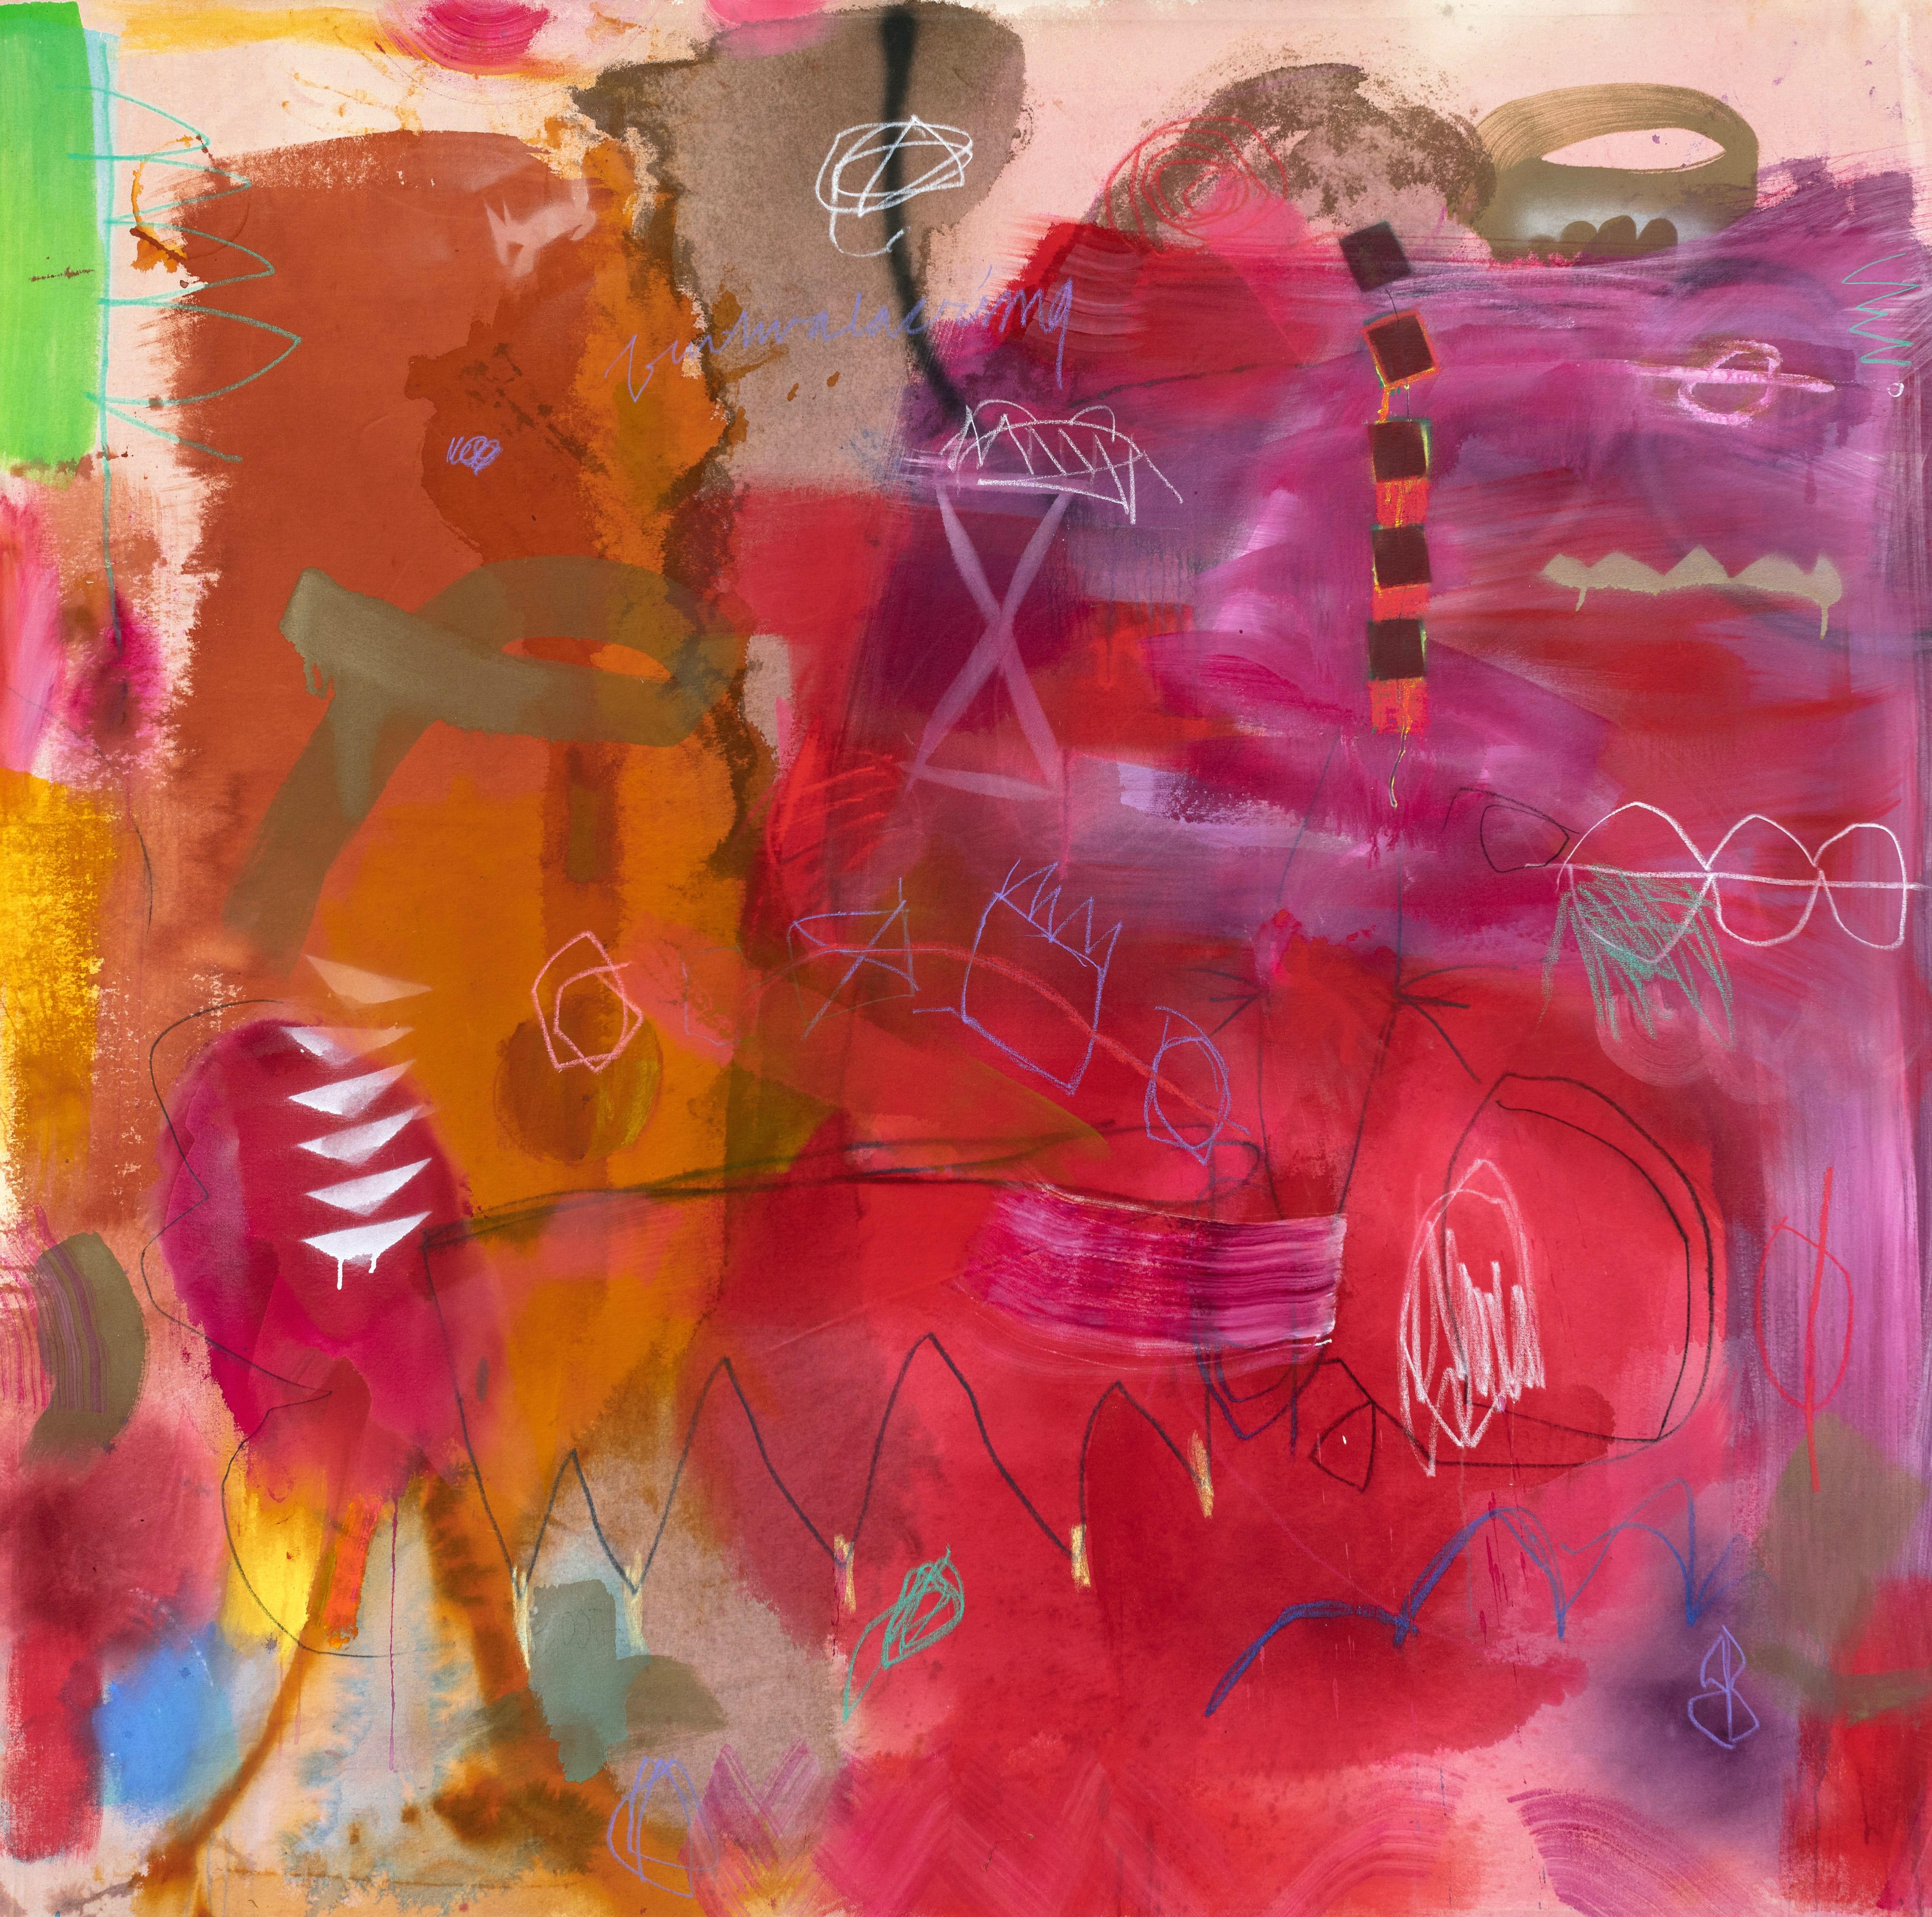 Abstraction gestuelle_Rose/Orange/Pourpre_Mixte_Mozambique, Jane Booth 2022